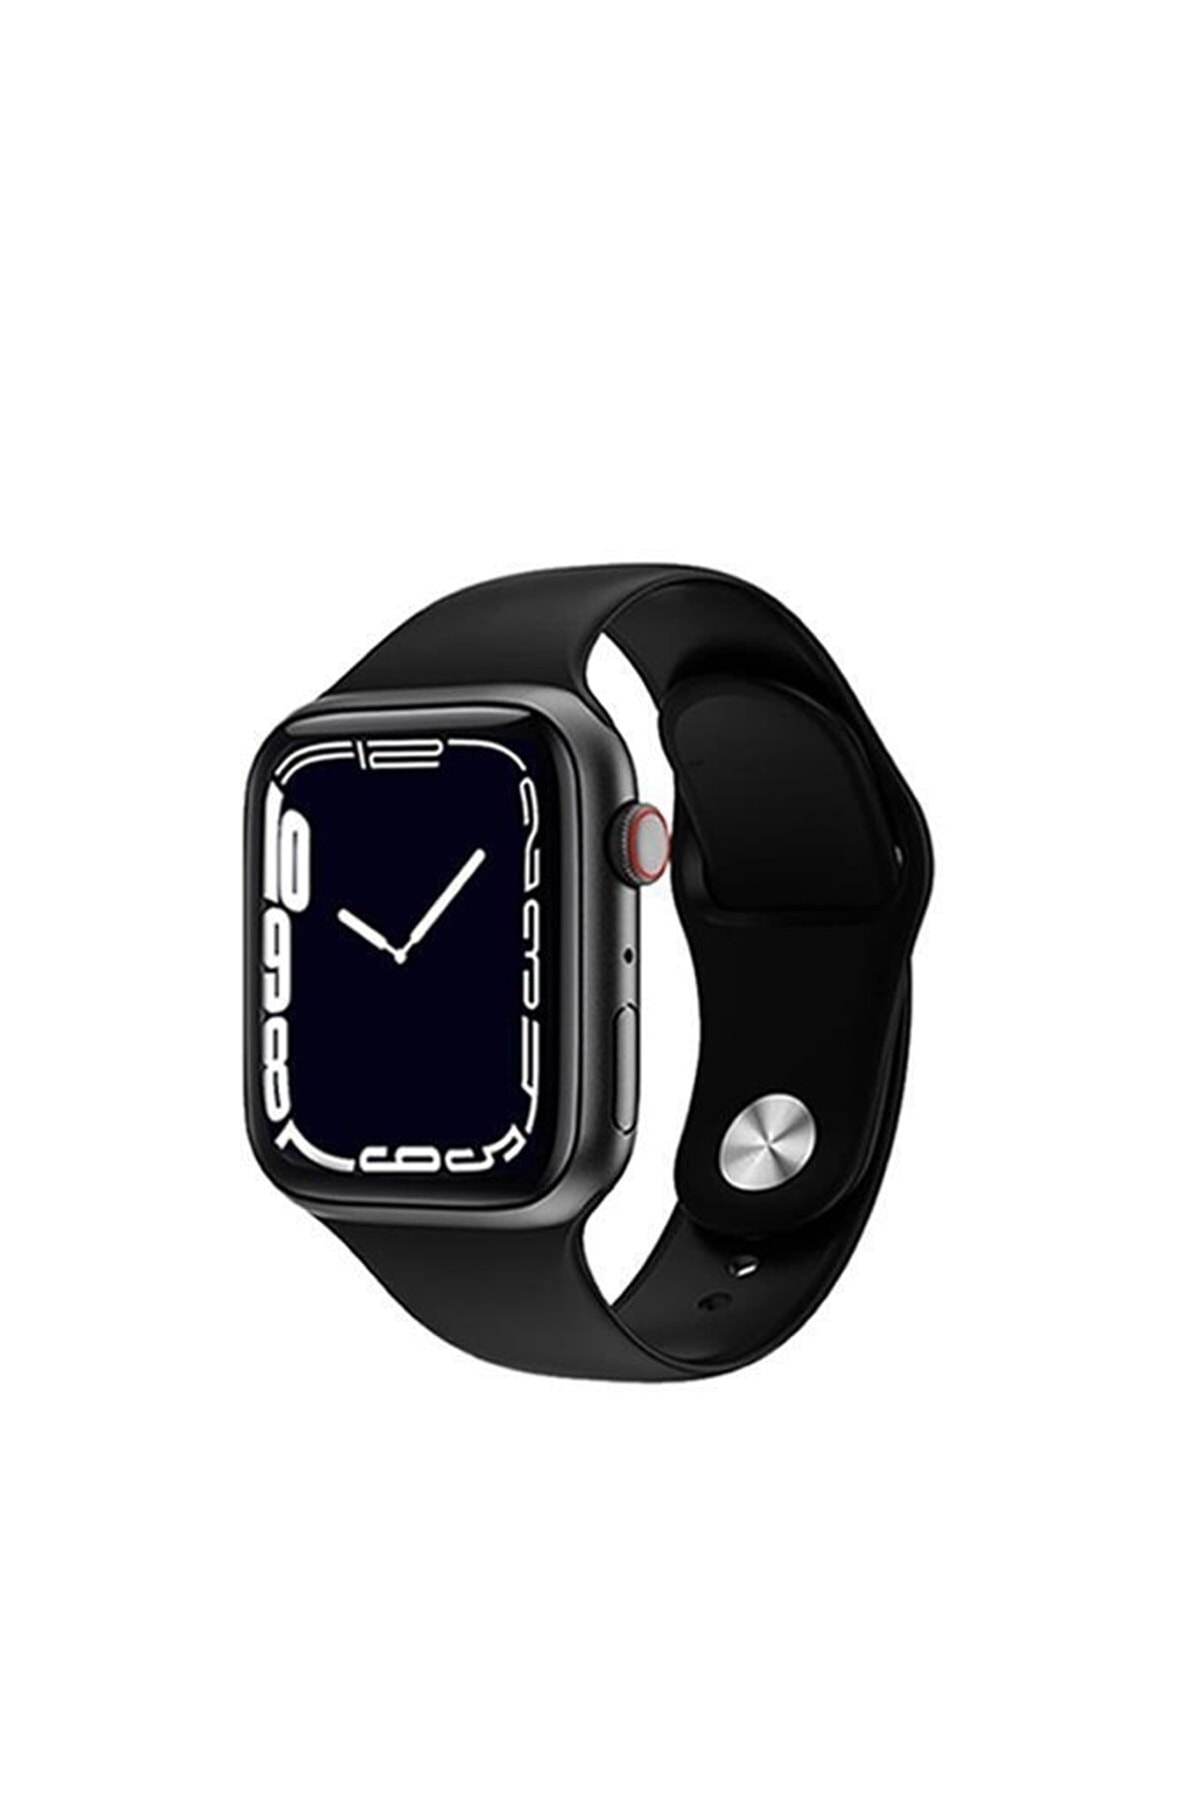 Kaptan&Polo Smart Watch Konuşma Özellikli Iphone Ve Android Uyumlu Jd77 Akıllı Saat